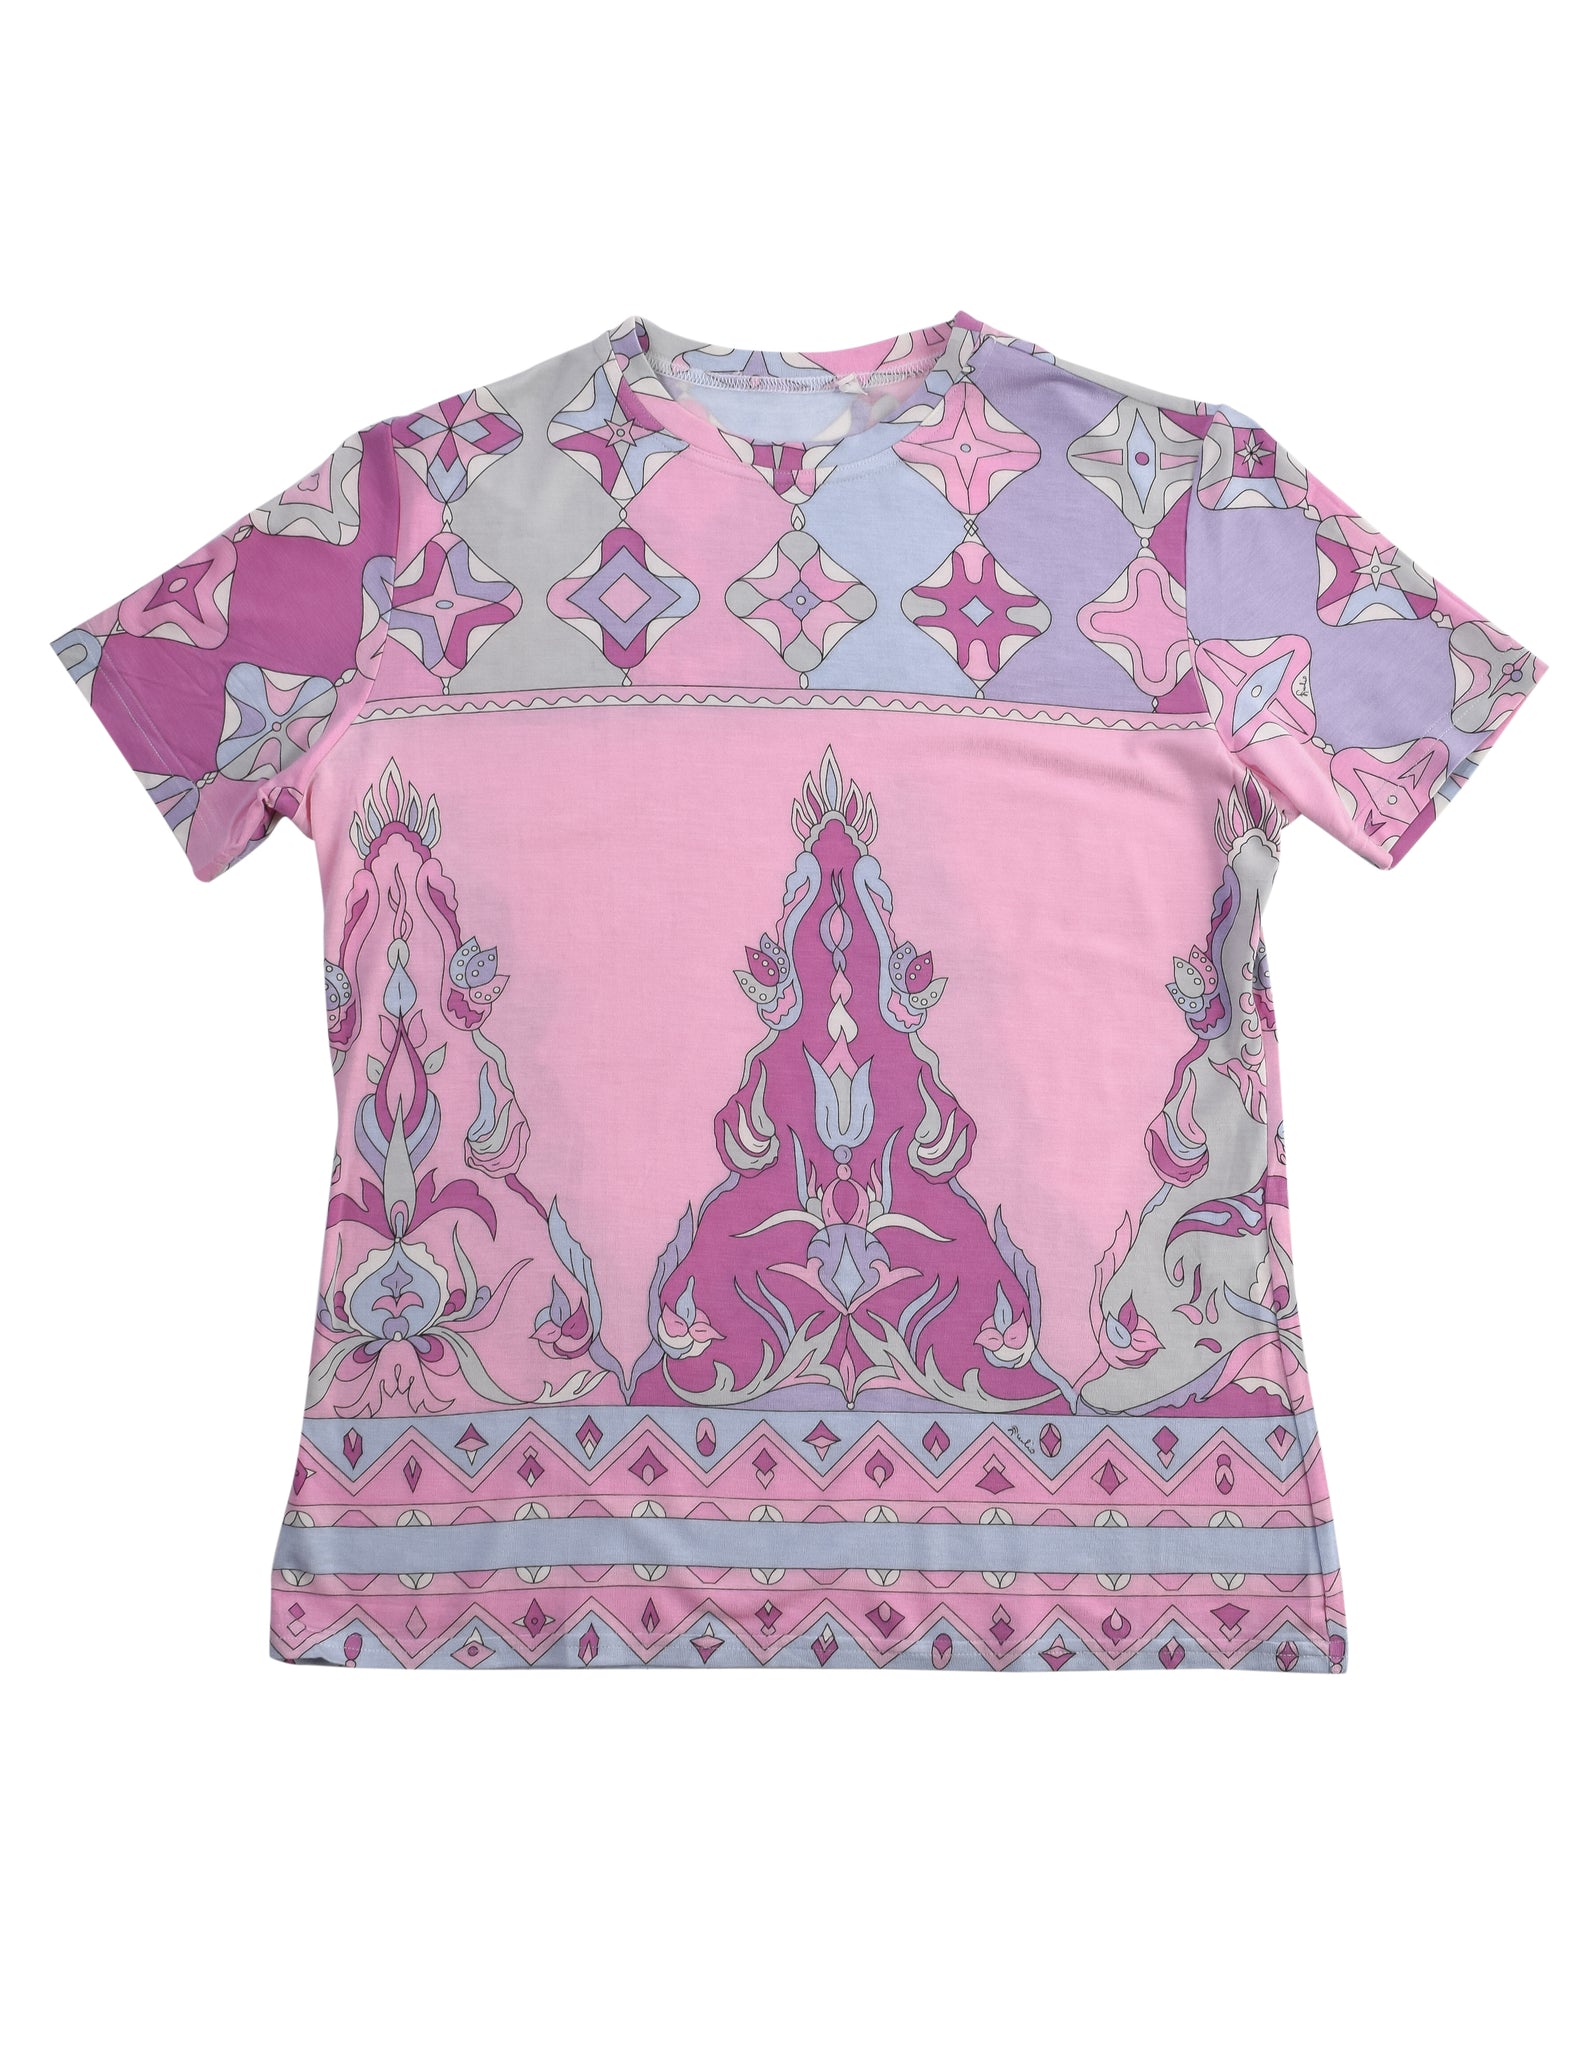 Emilio Pucci Vintage Pastel Pink Graphic Print Jersey T-Shirt